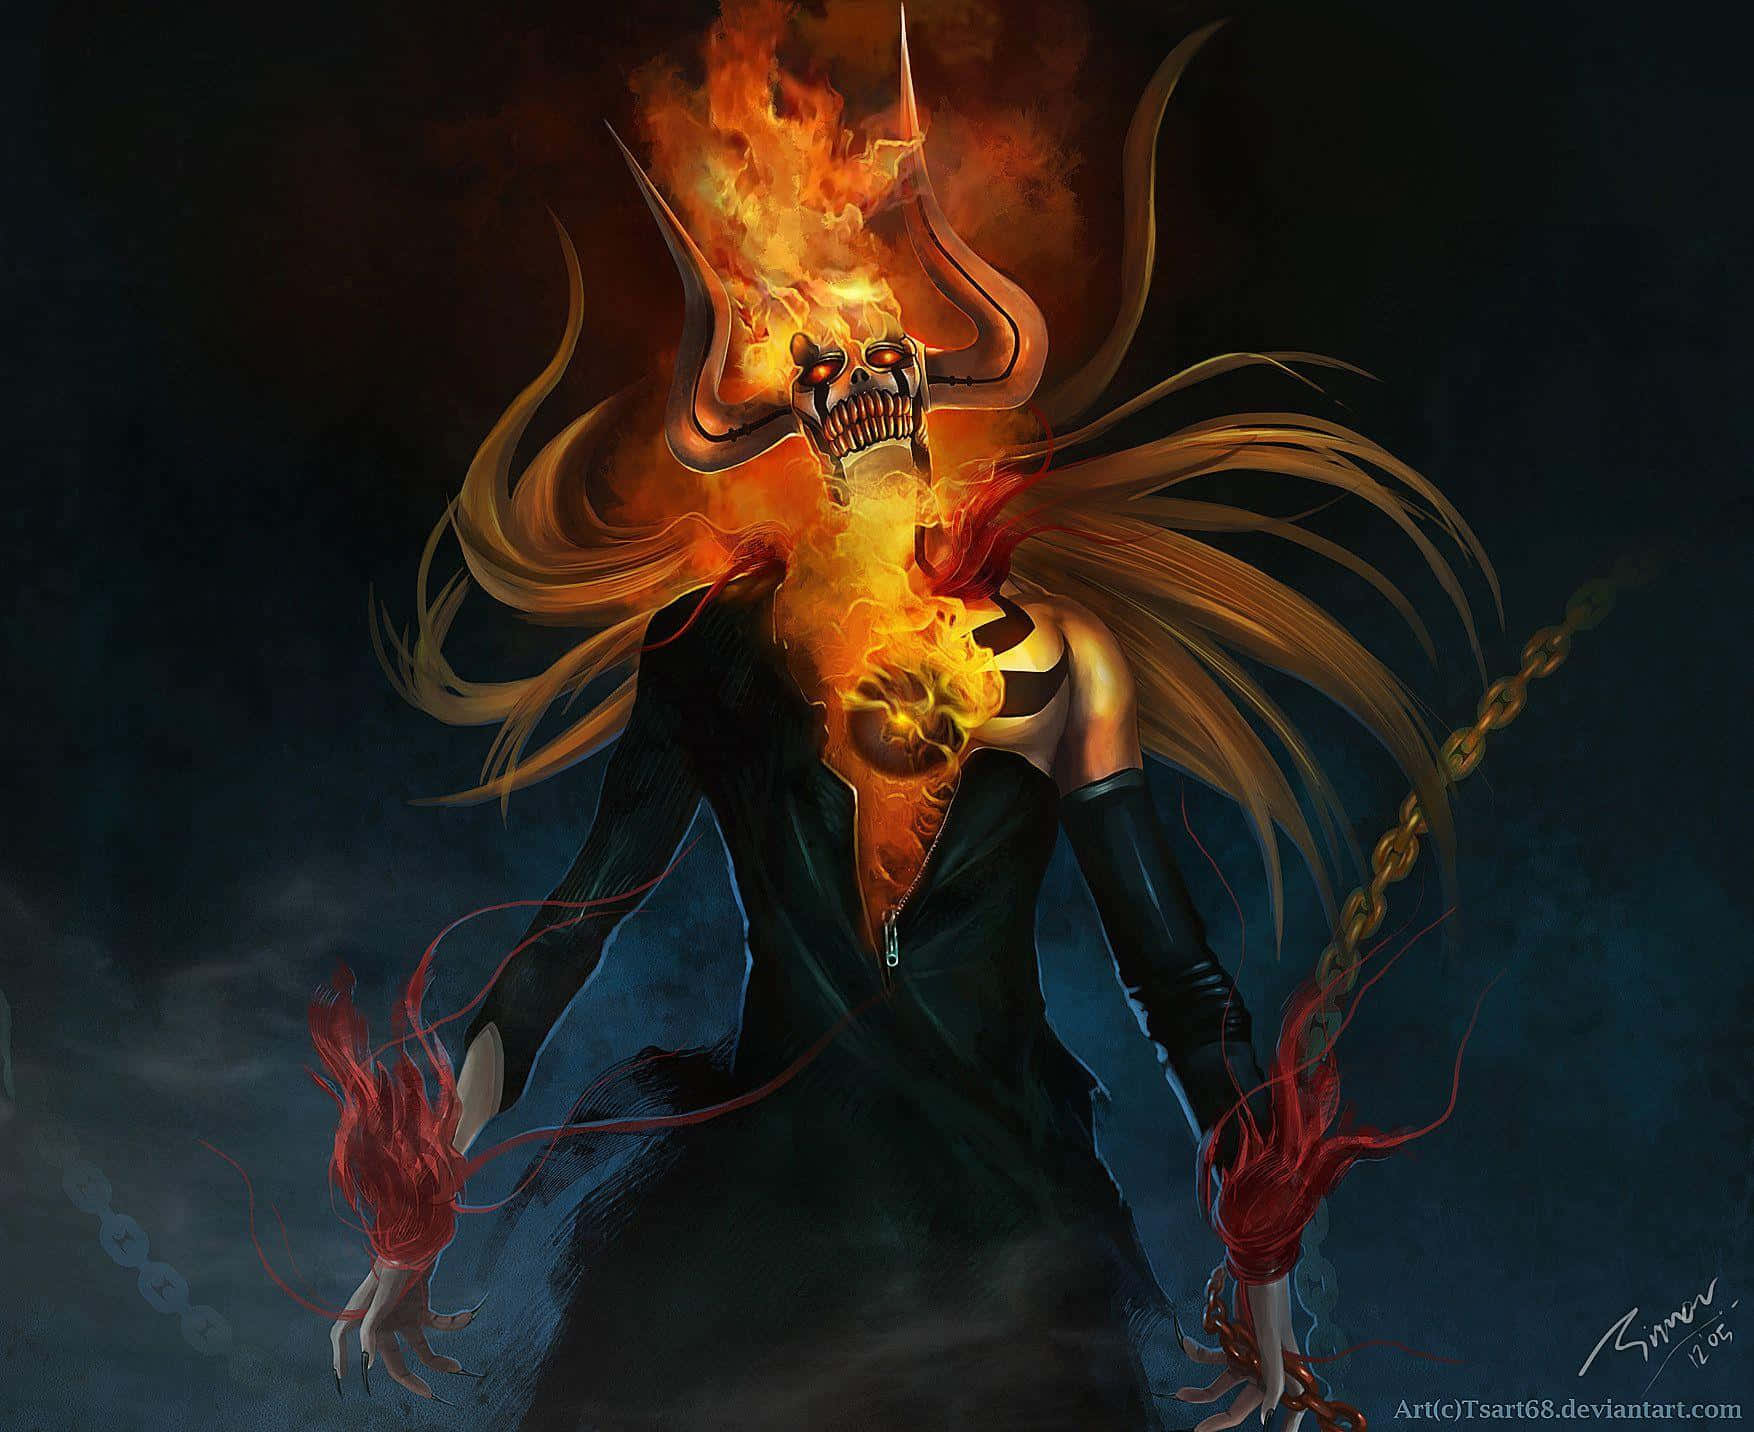 Vasto Lorde Ichigo Final Form On Fire Wallpaper